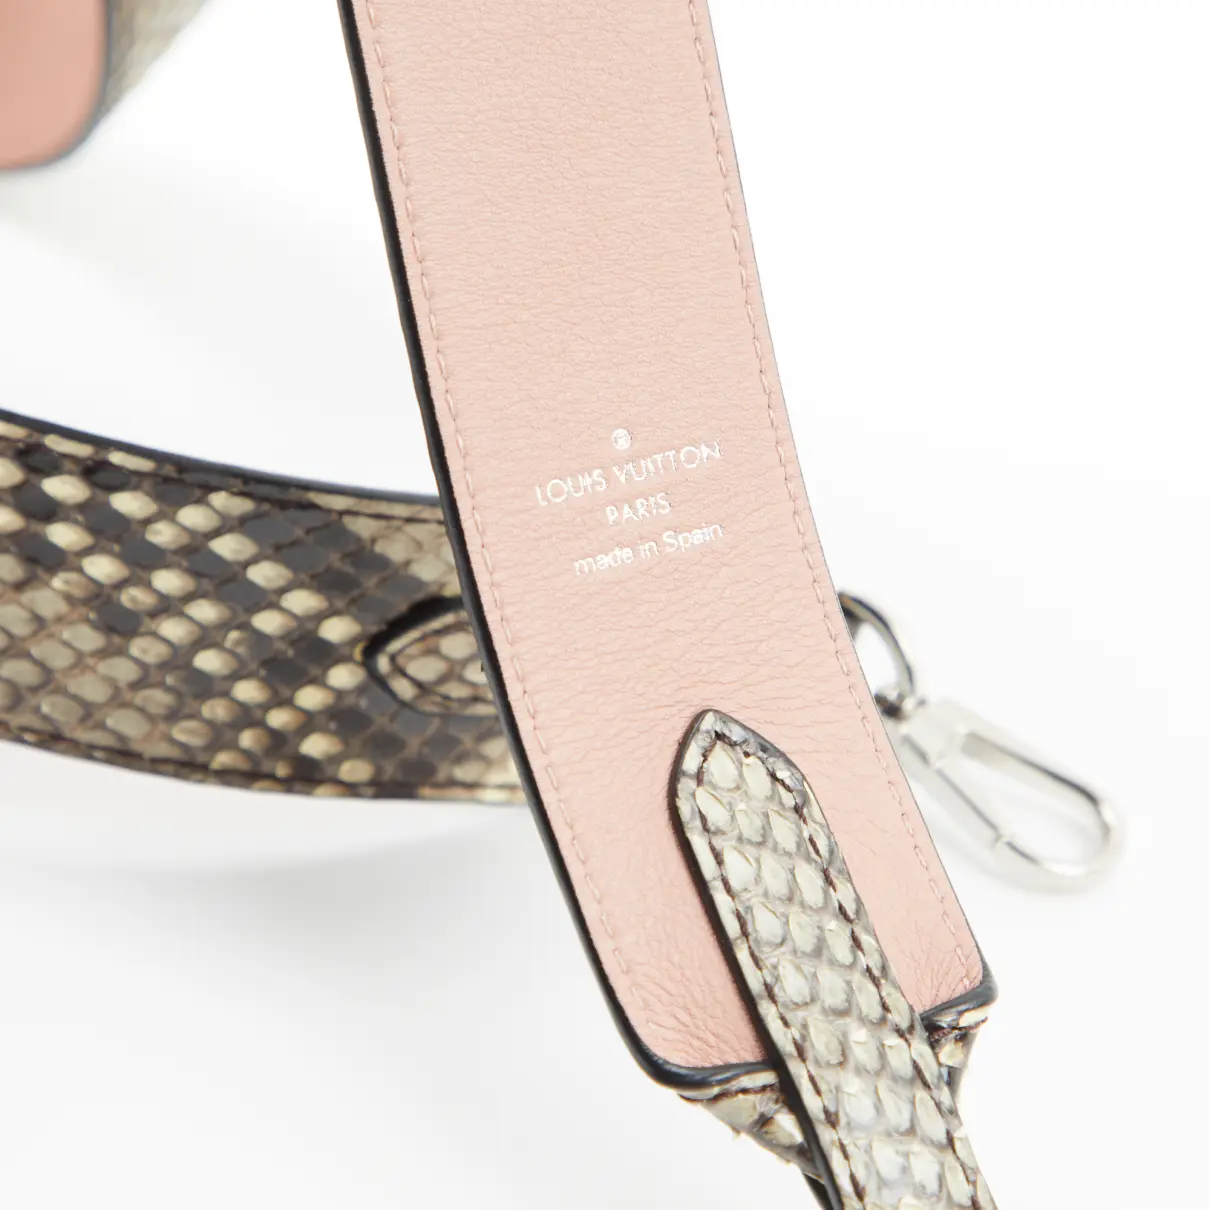 Buy Louis Vuitton Exotic leathers purse online